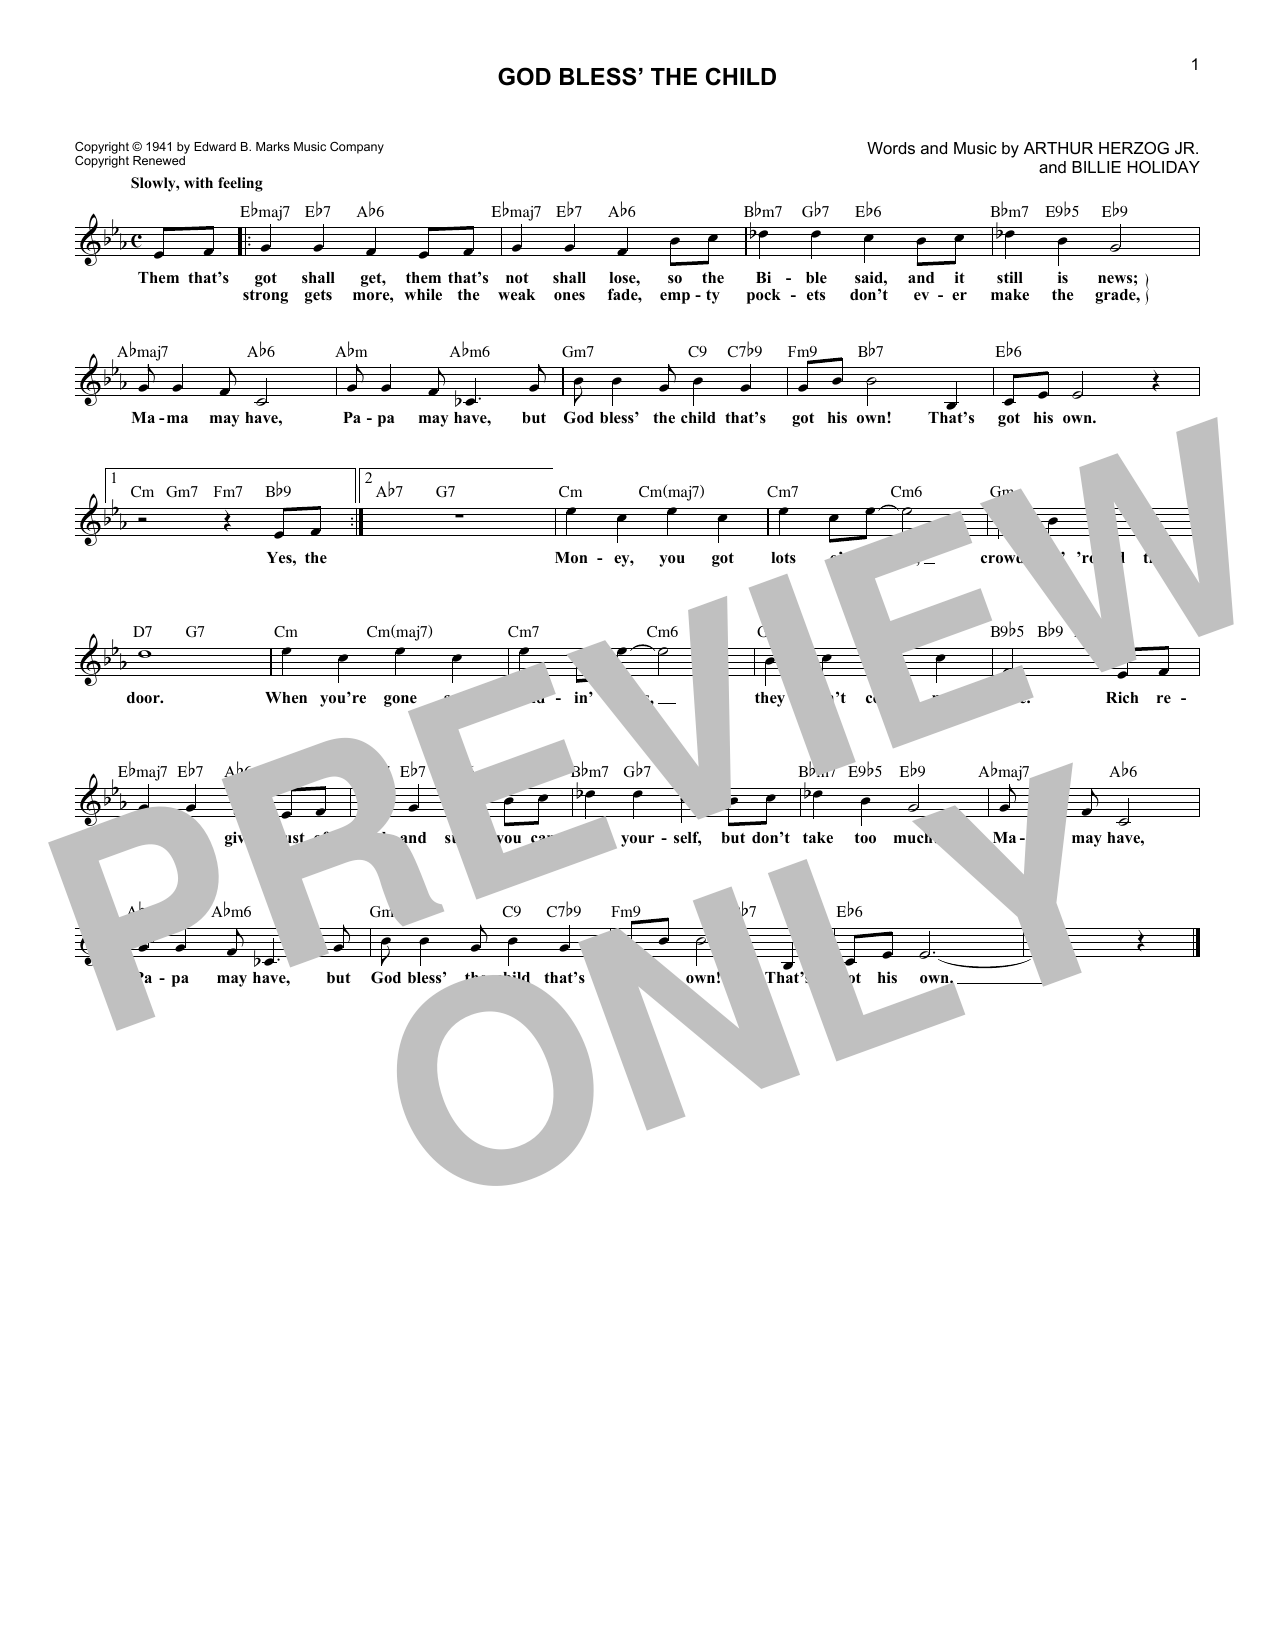 Arthur Herzog Jr. God Bless' The Child Sheet Music Notes & Chords for Lead Sheet / Fake Book - Download or Print PDF